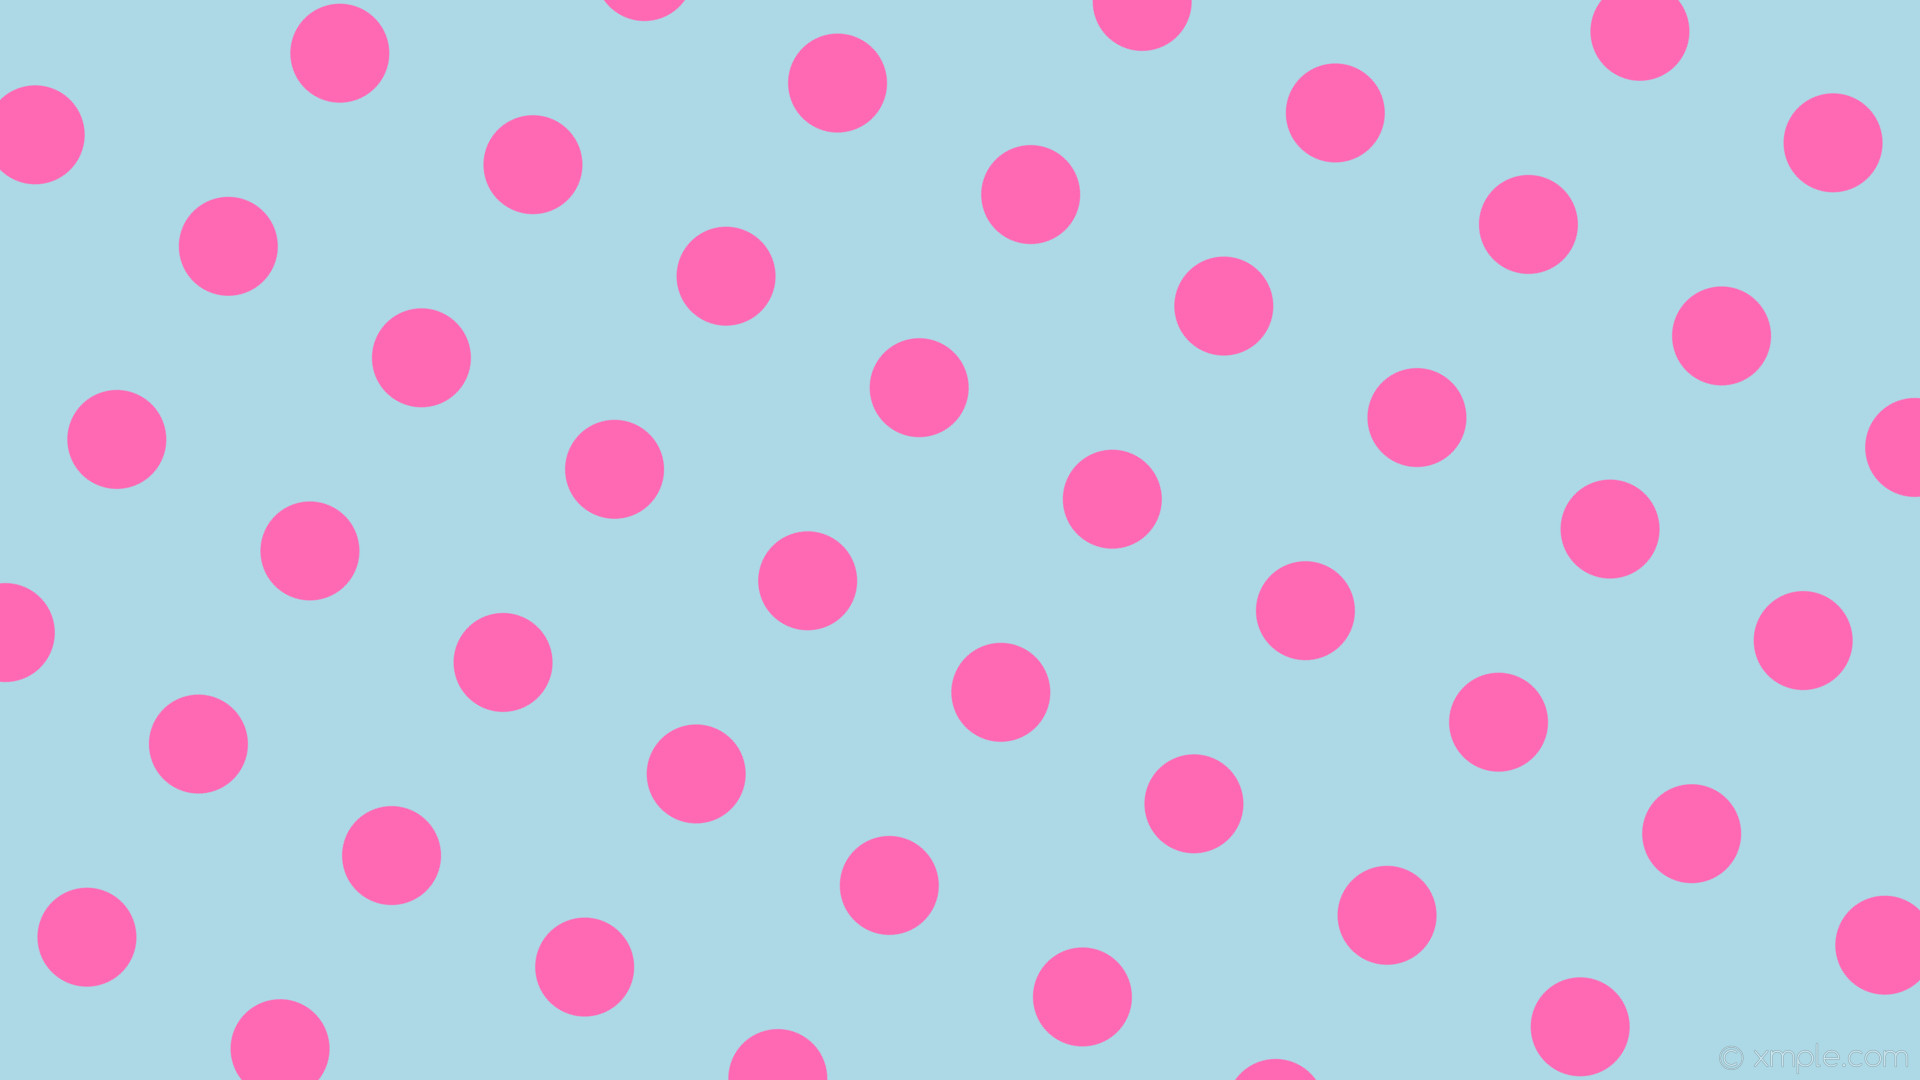 wallpaper pink blue dots polka spots light blue hot pink #add8e6 #ff69b4  150Â°